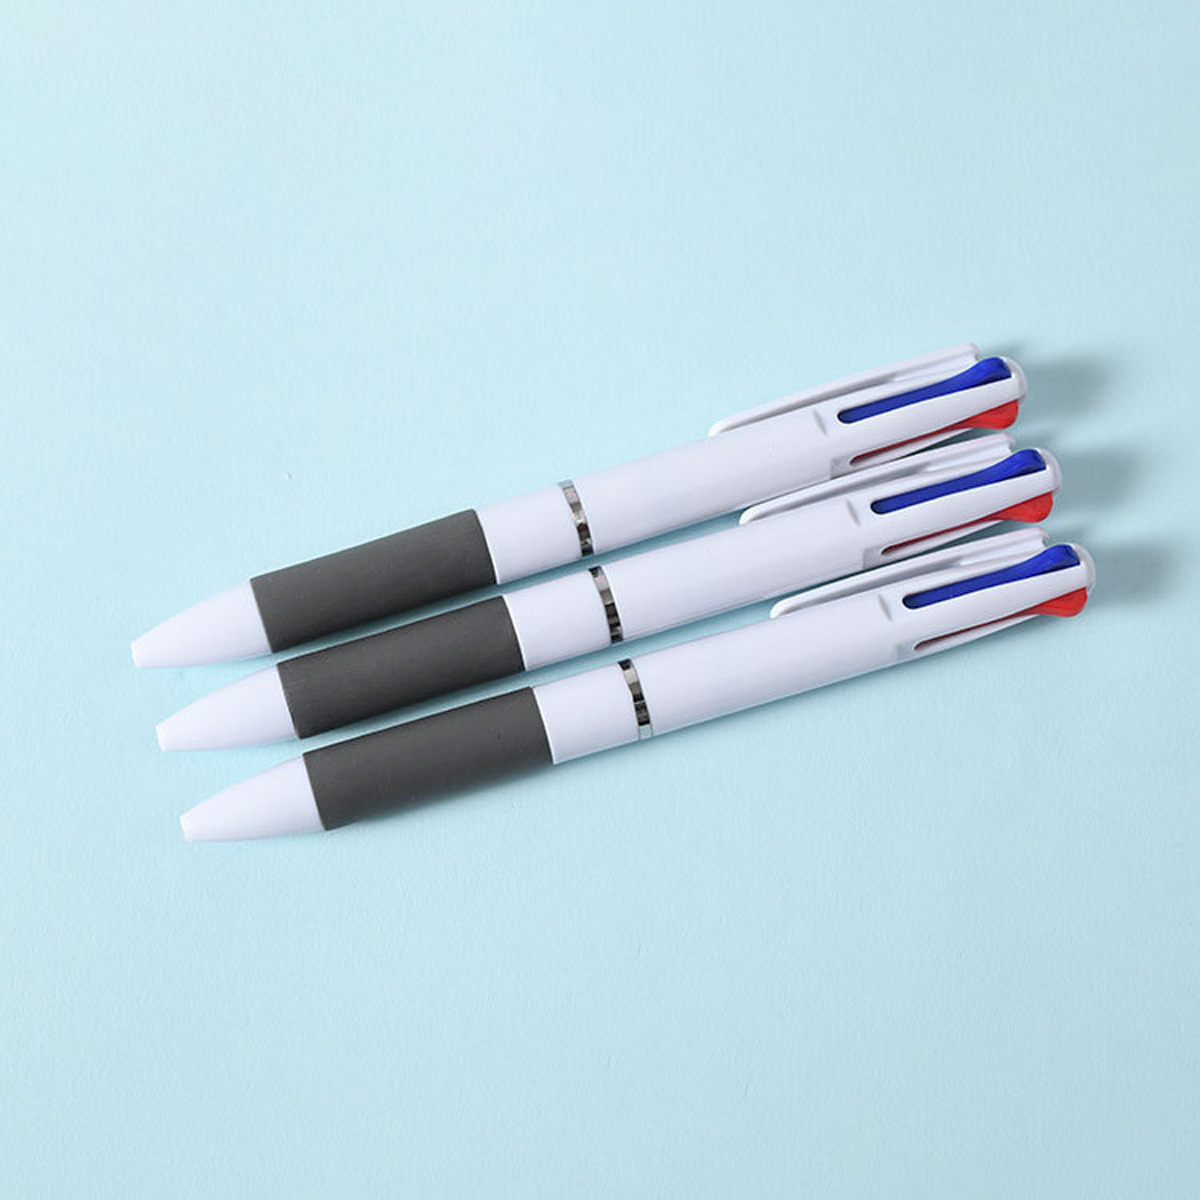 Oil Ink Triangle 3 Color Ballpoint Pen, Multi-colored Pens